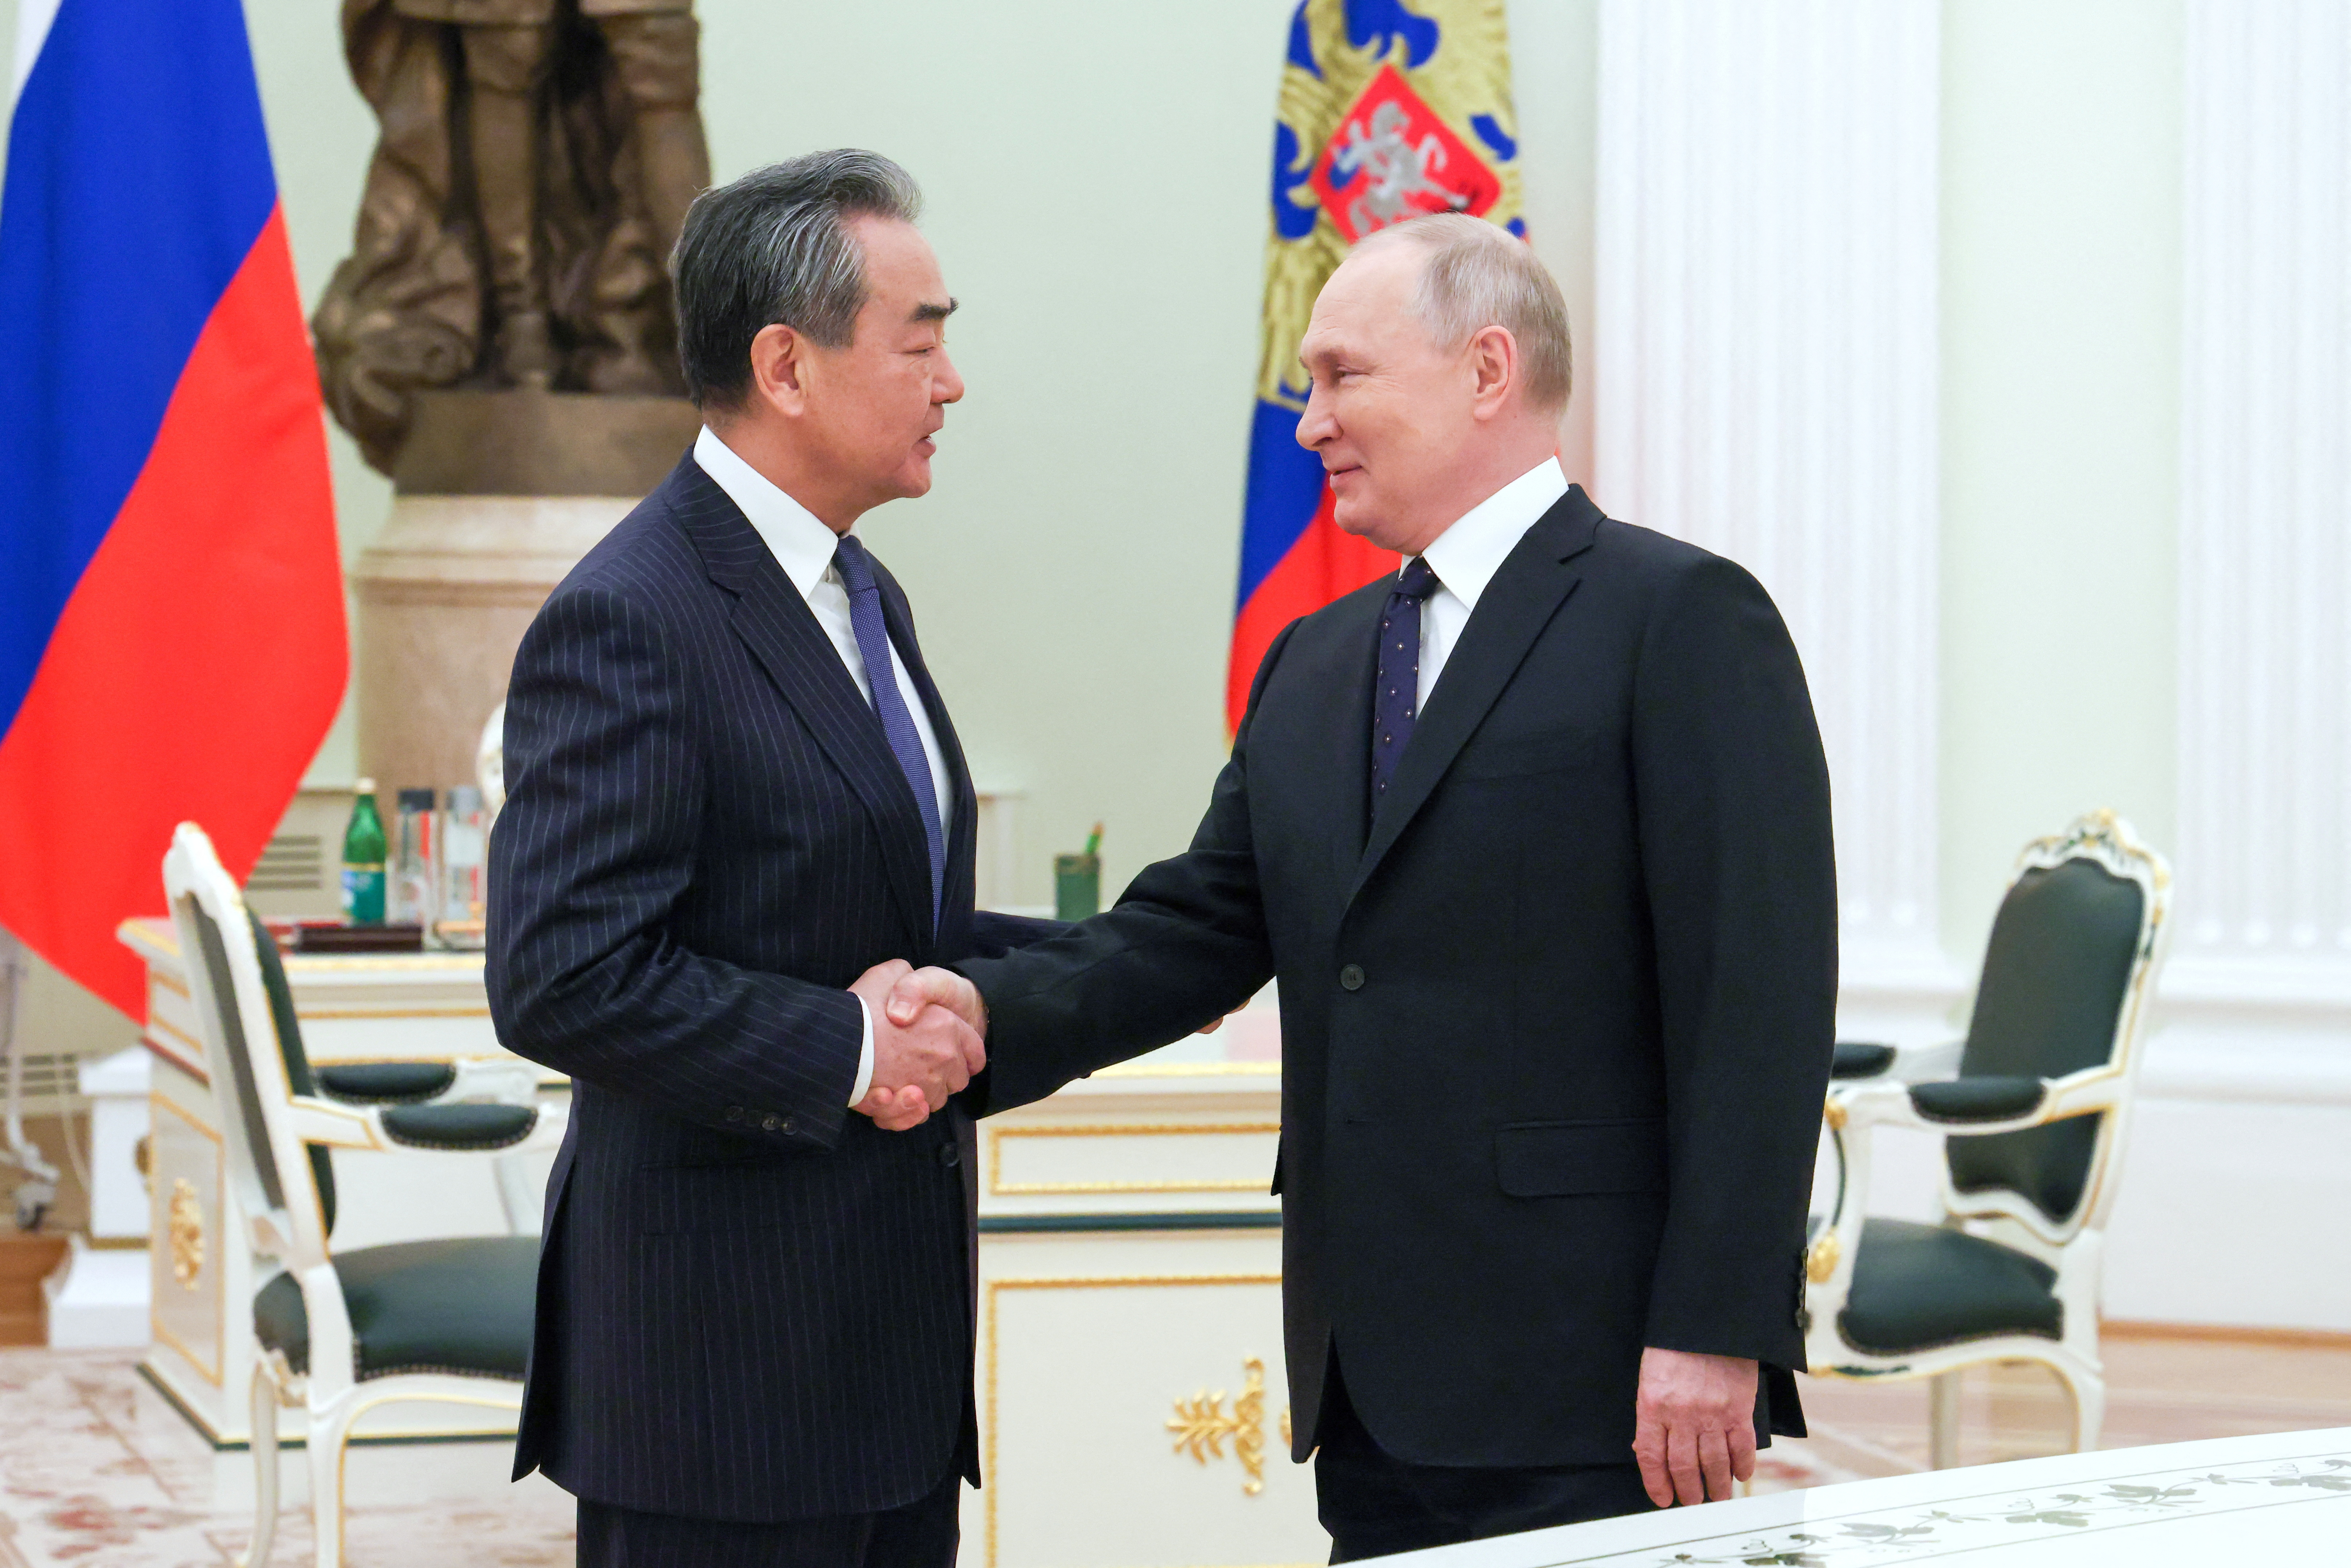 Putin recibe al jefe de la diplomacia china Wang Yi. "Todo está progresando, desarrollándose. Estamos alcanzando nuevas fronteras”, afirmó Putin. (Sputnik/Anton Novoderezhkin/REUTERS)